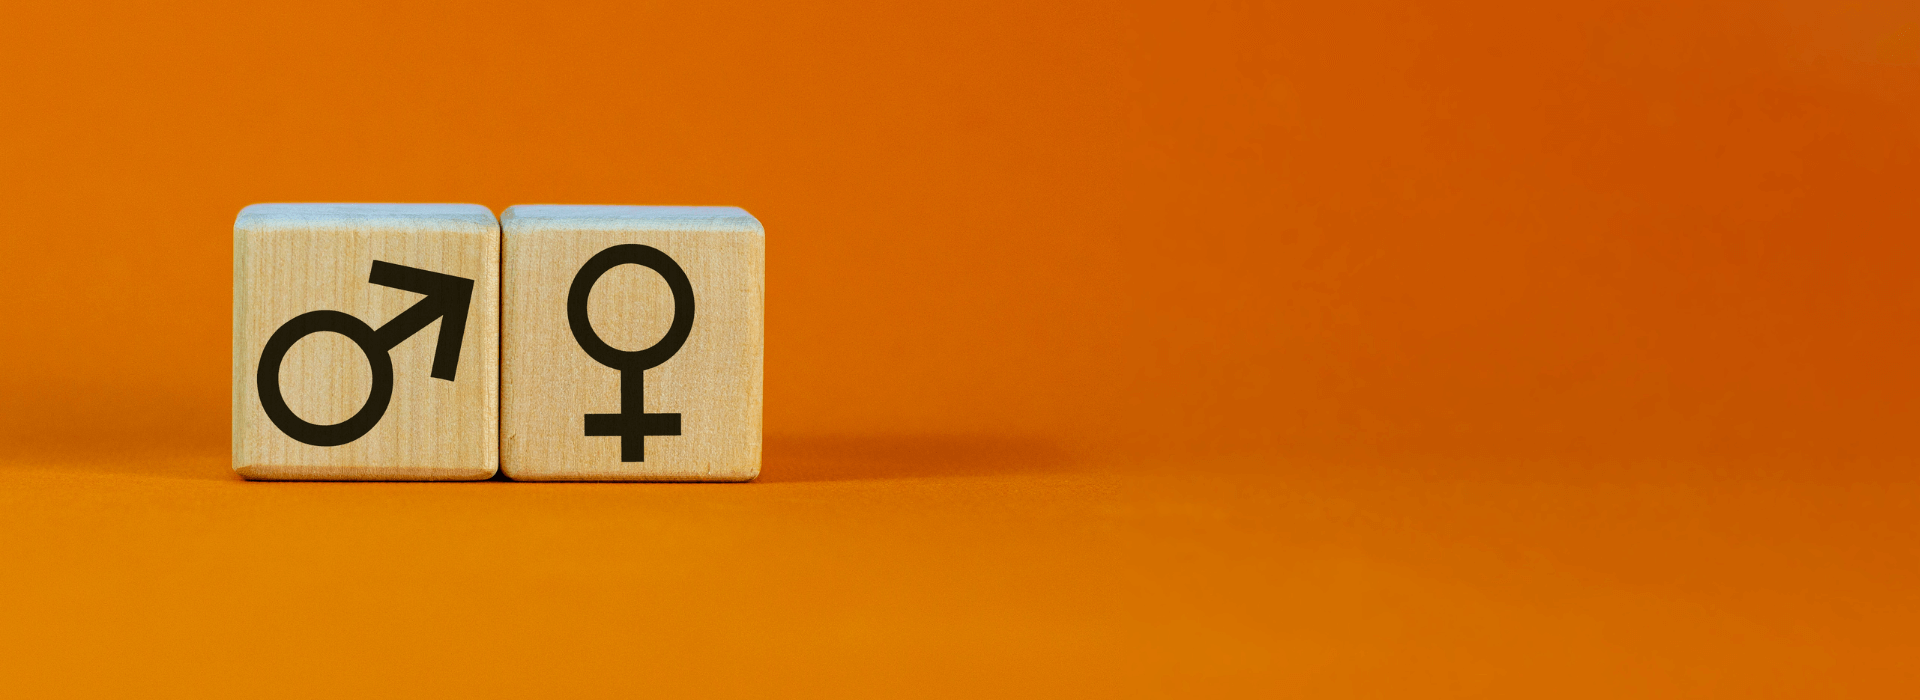 Chakra Balancing and Perimenopause | Wooden blocks with Male and Female symbols on orange background | Shine Body & Bath Chakra Soap | Blog